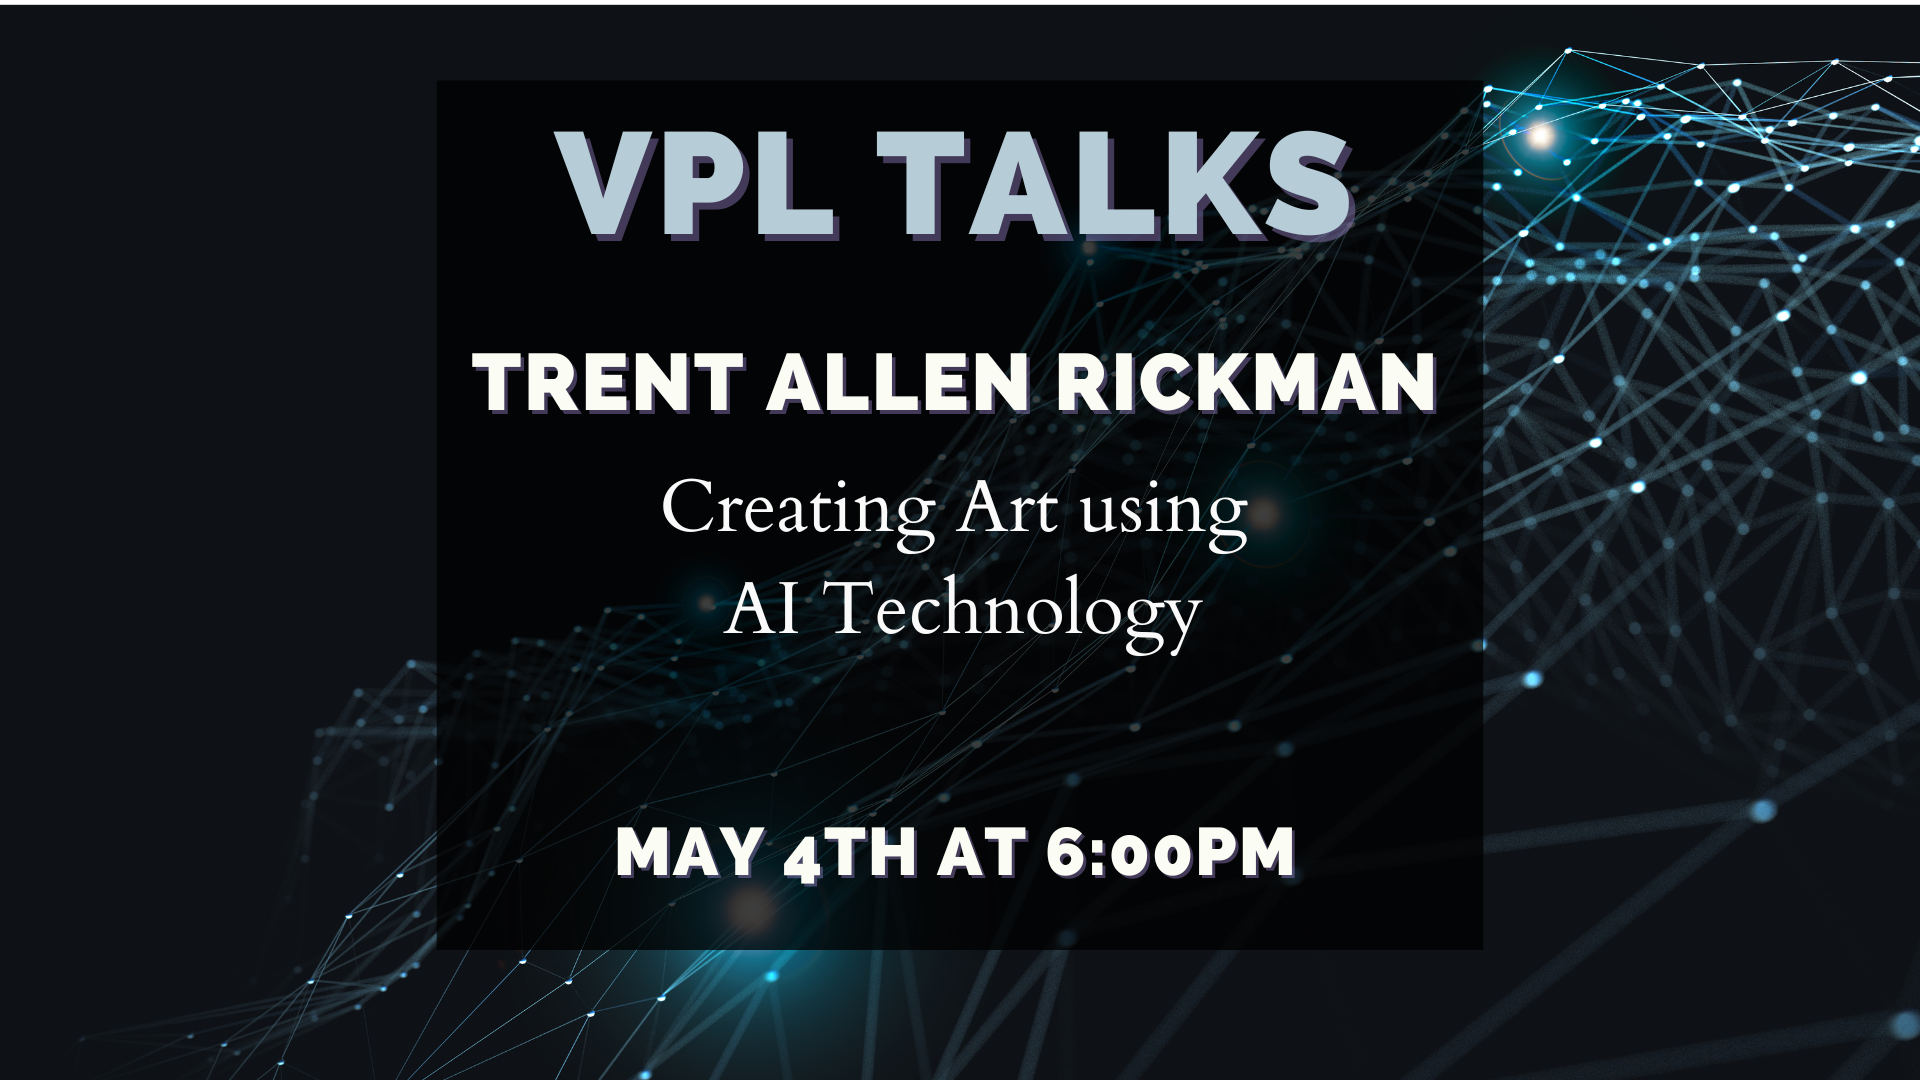 VPL Talks - Trent Allen Rickman May 4th at 6:00pm